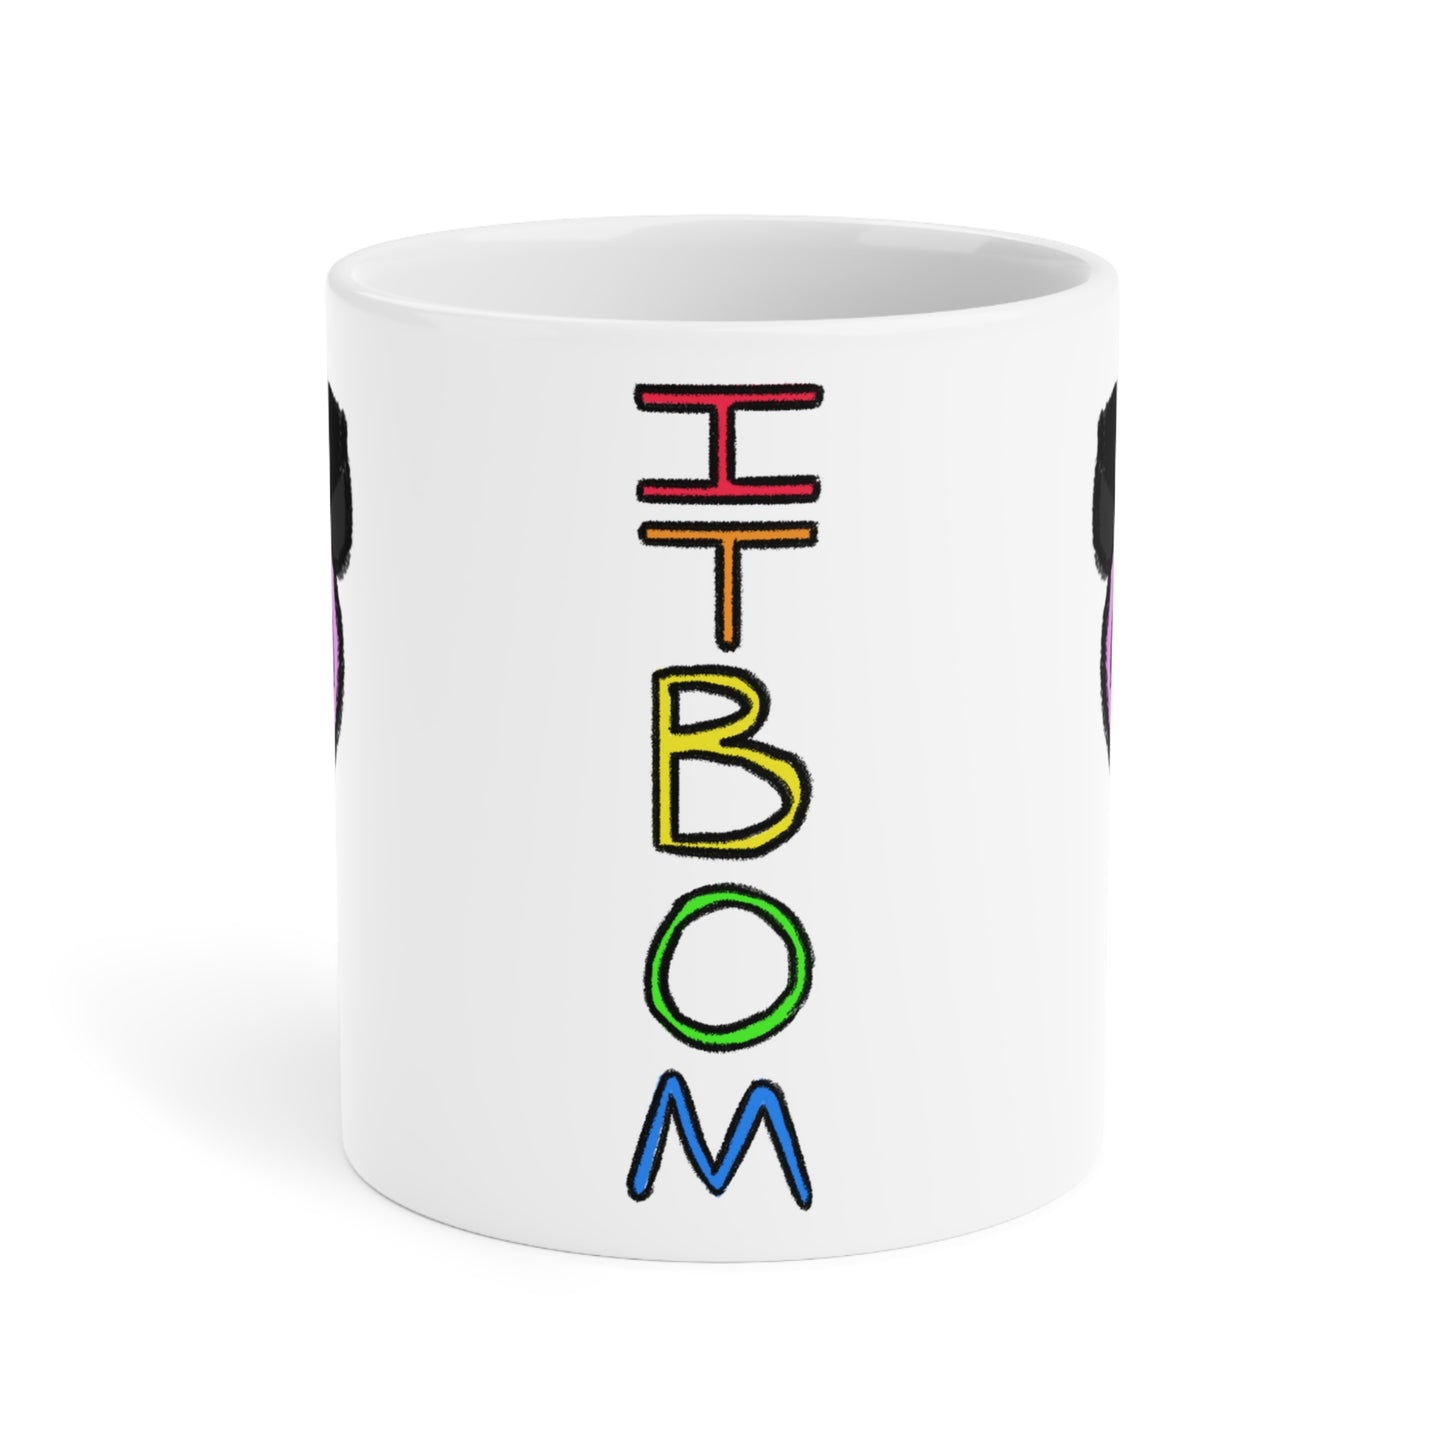 ITBOM Black Dog JACK BOSS Ceramic Mugs (11oz15oz20oz)